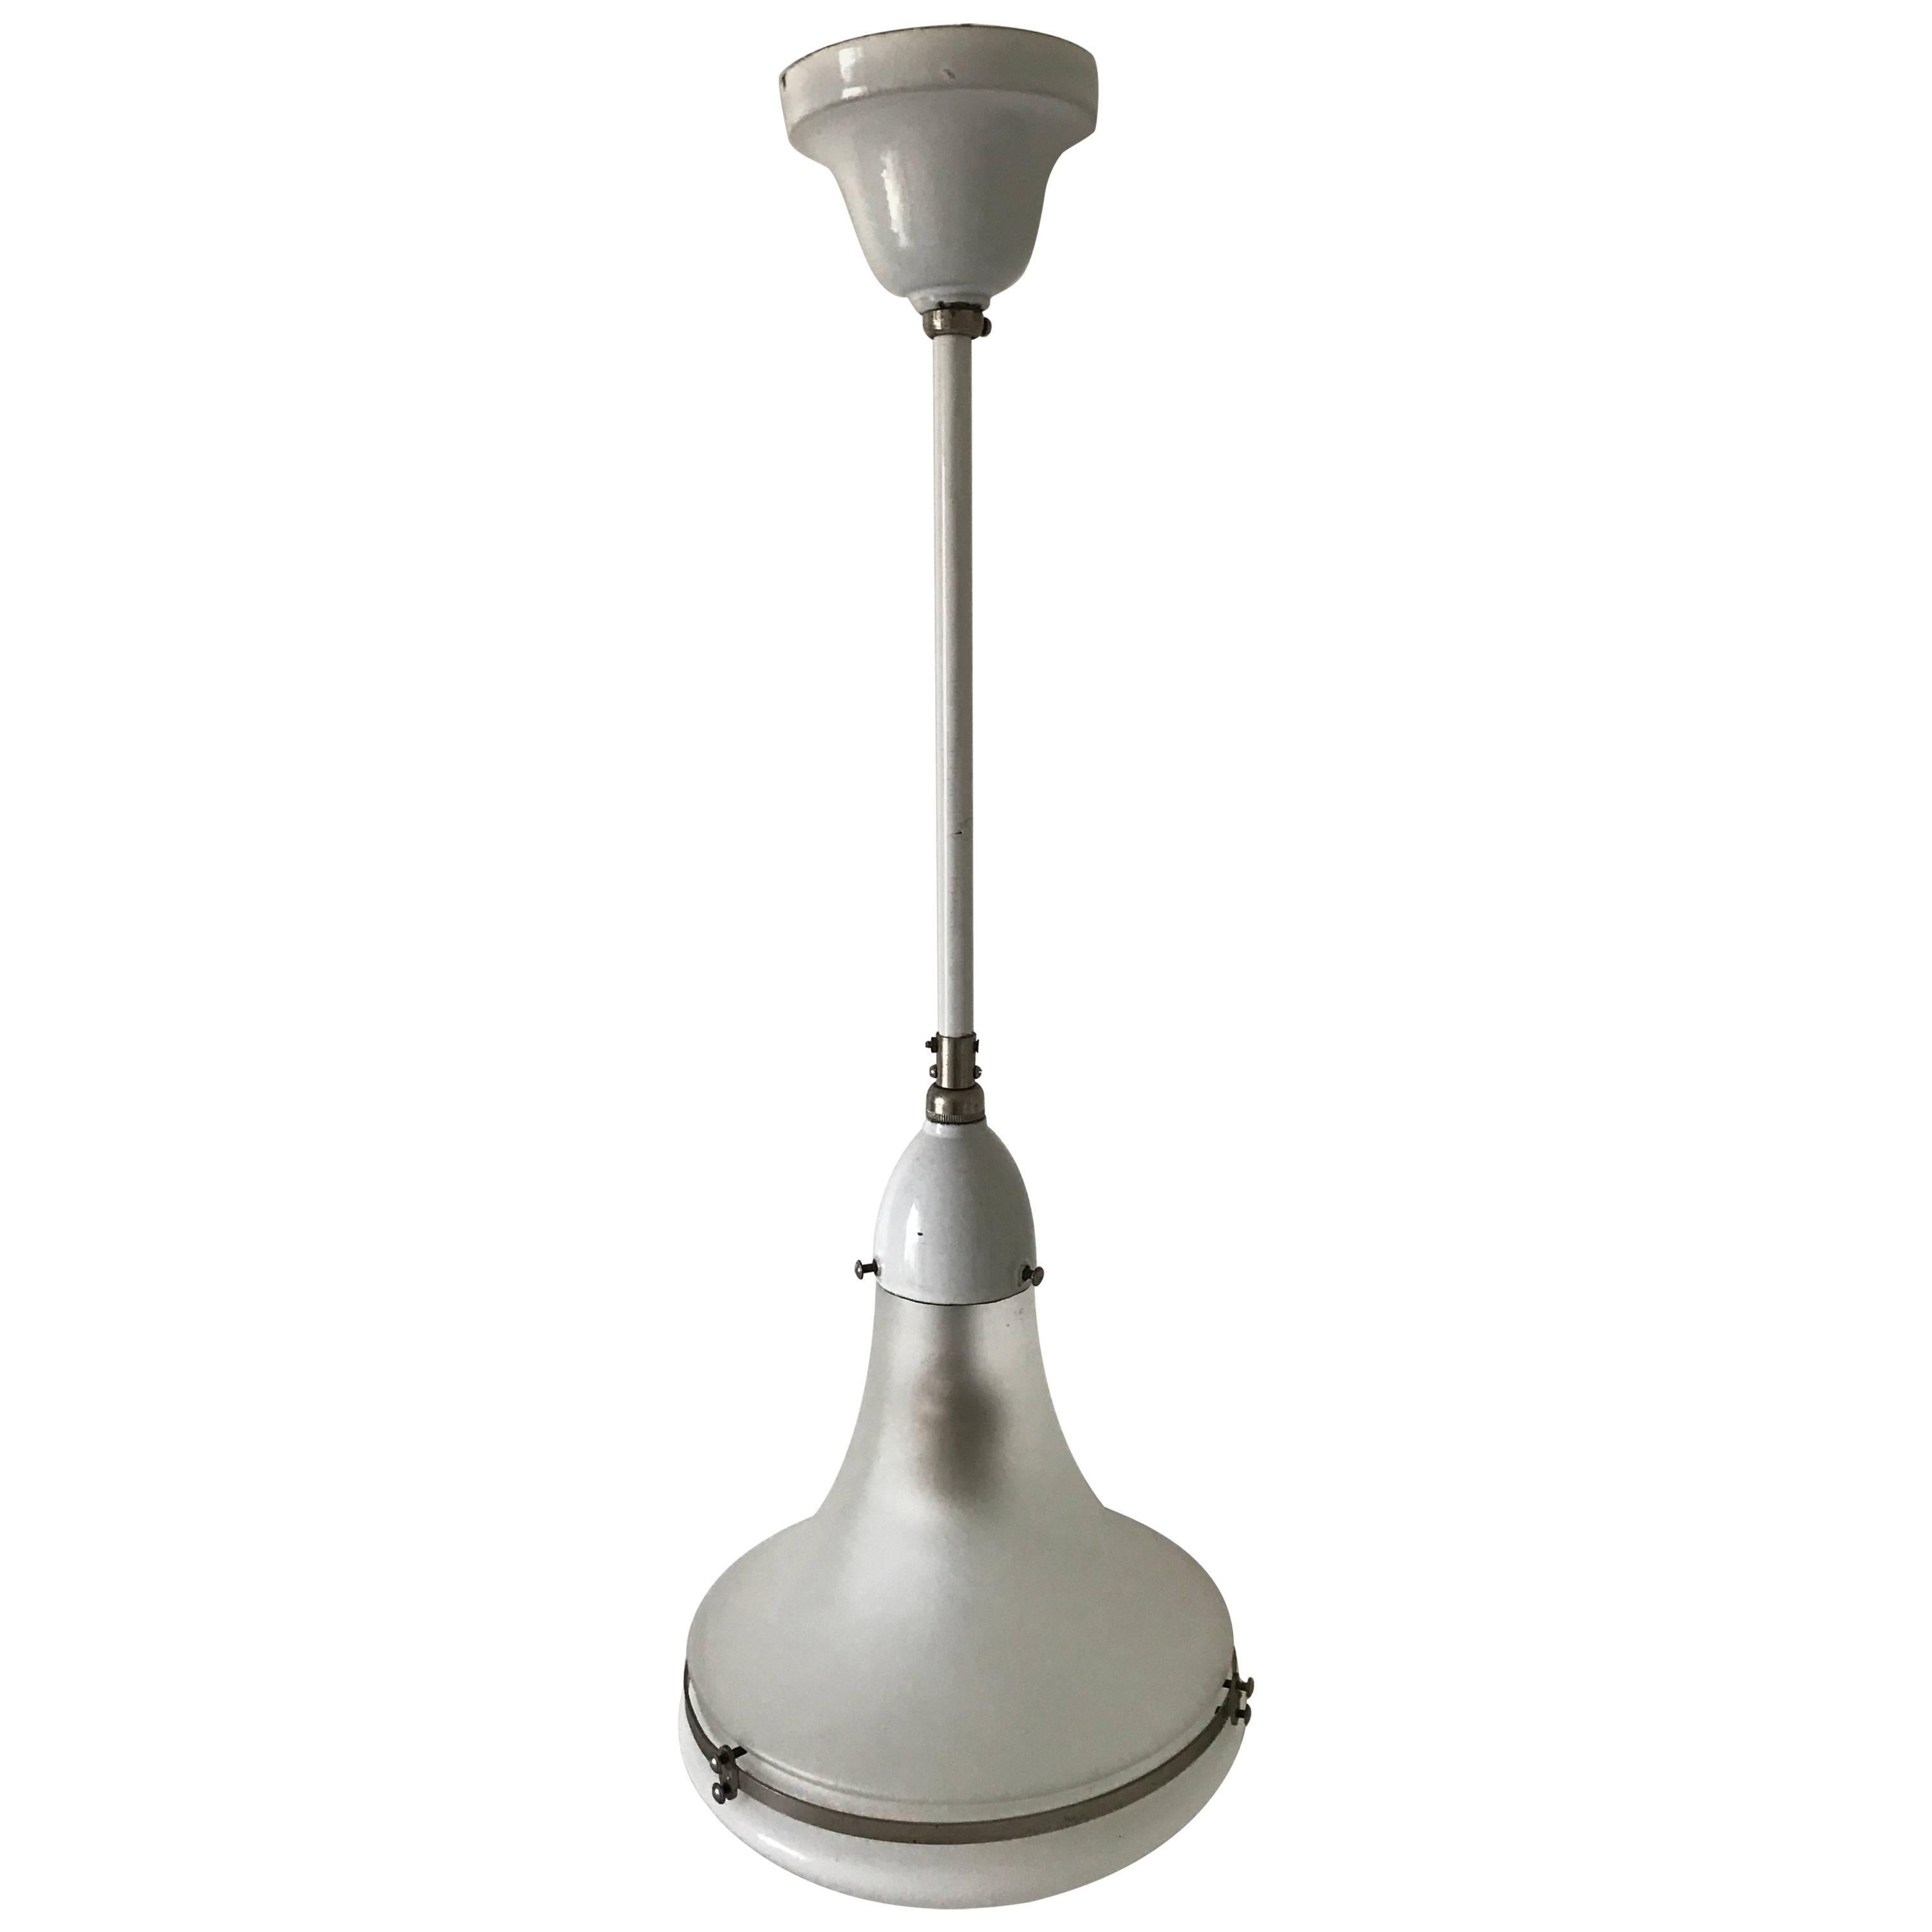 1925 Rare White Enamel Peter Behrens Luzette Lamp Small Model For Sale